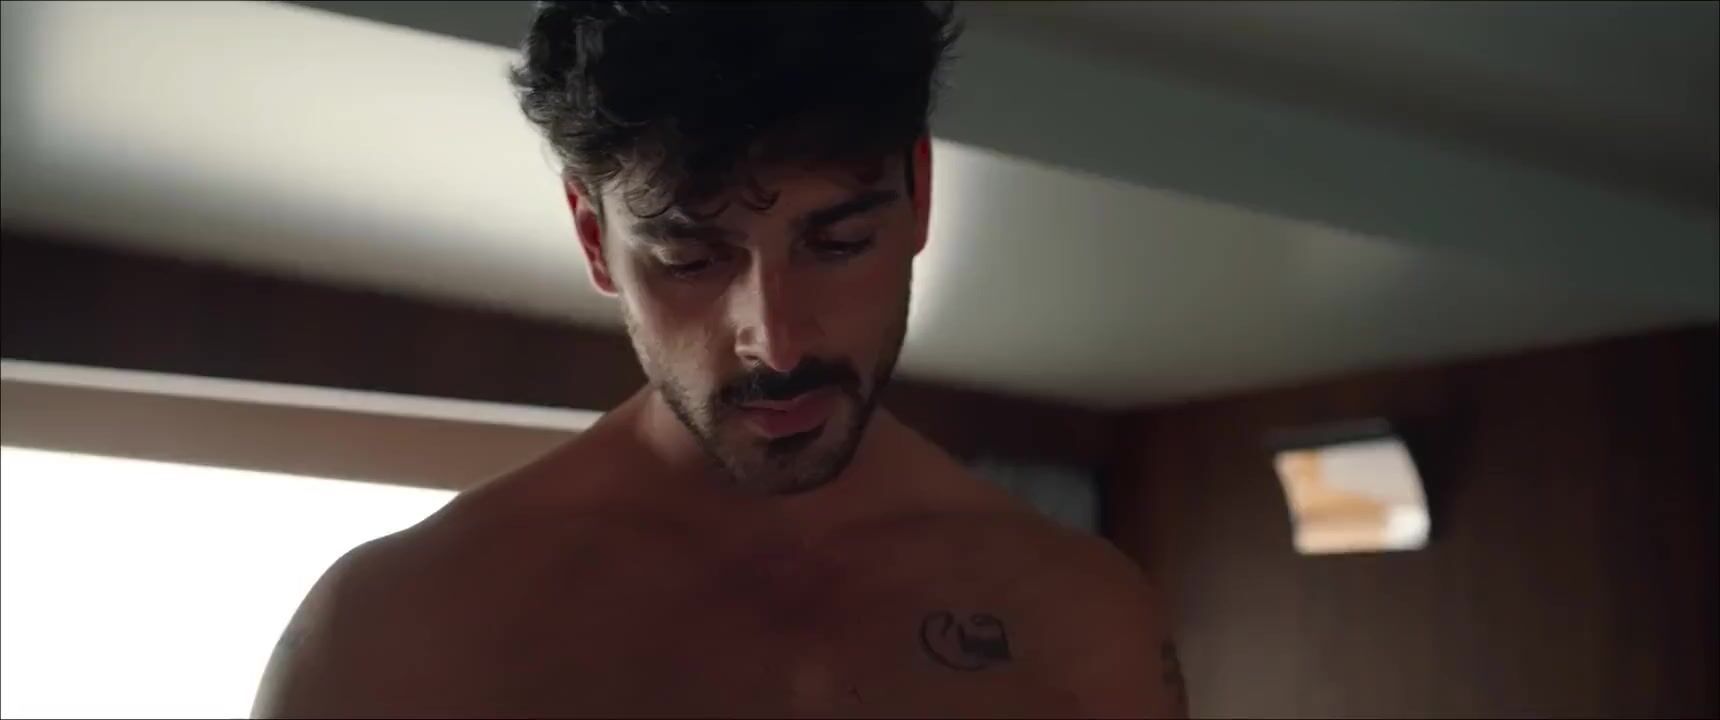 Fuskator Girl is banged in explicit sex scene from erotic Polish movie 365 dni (2020) Firefox